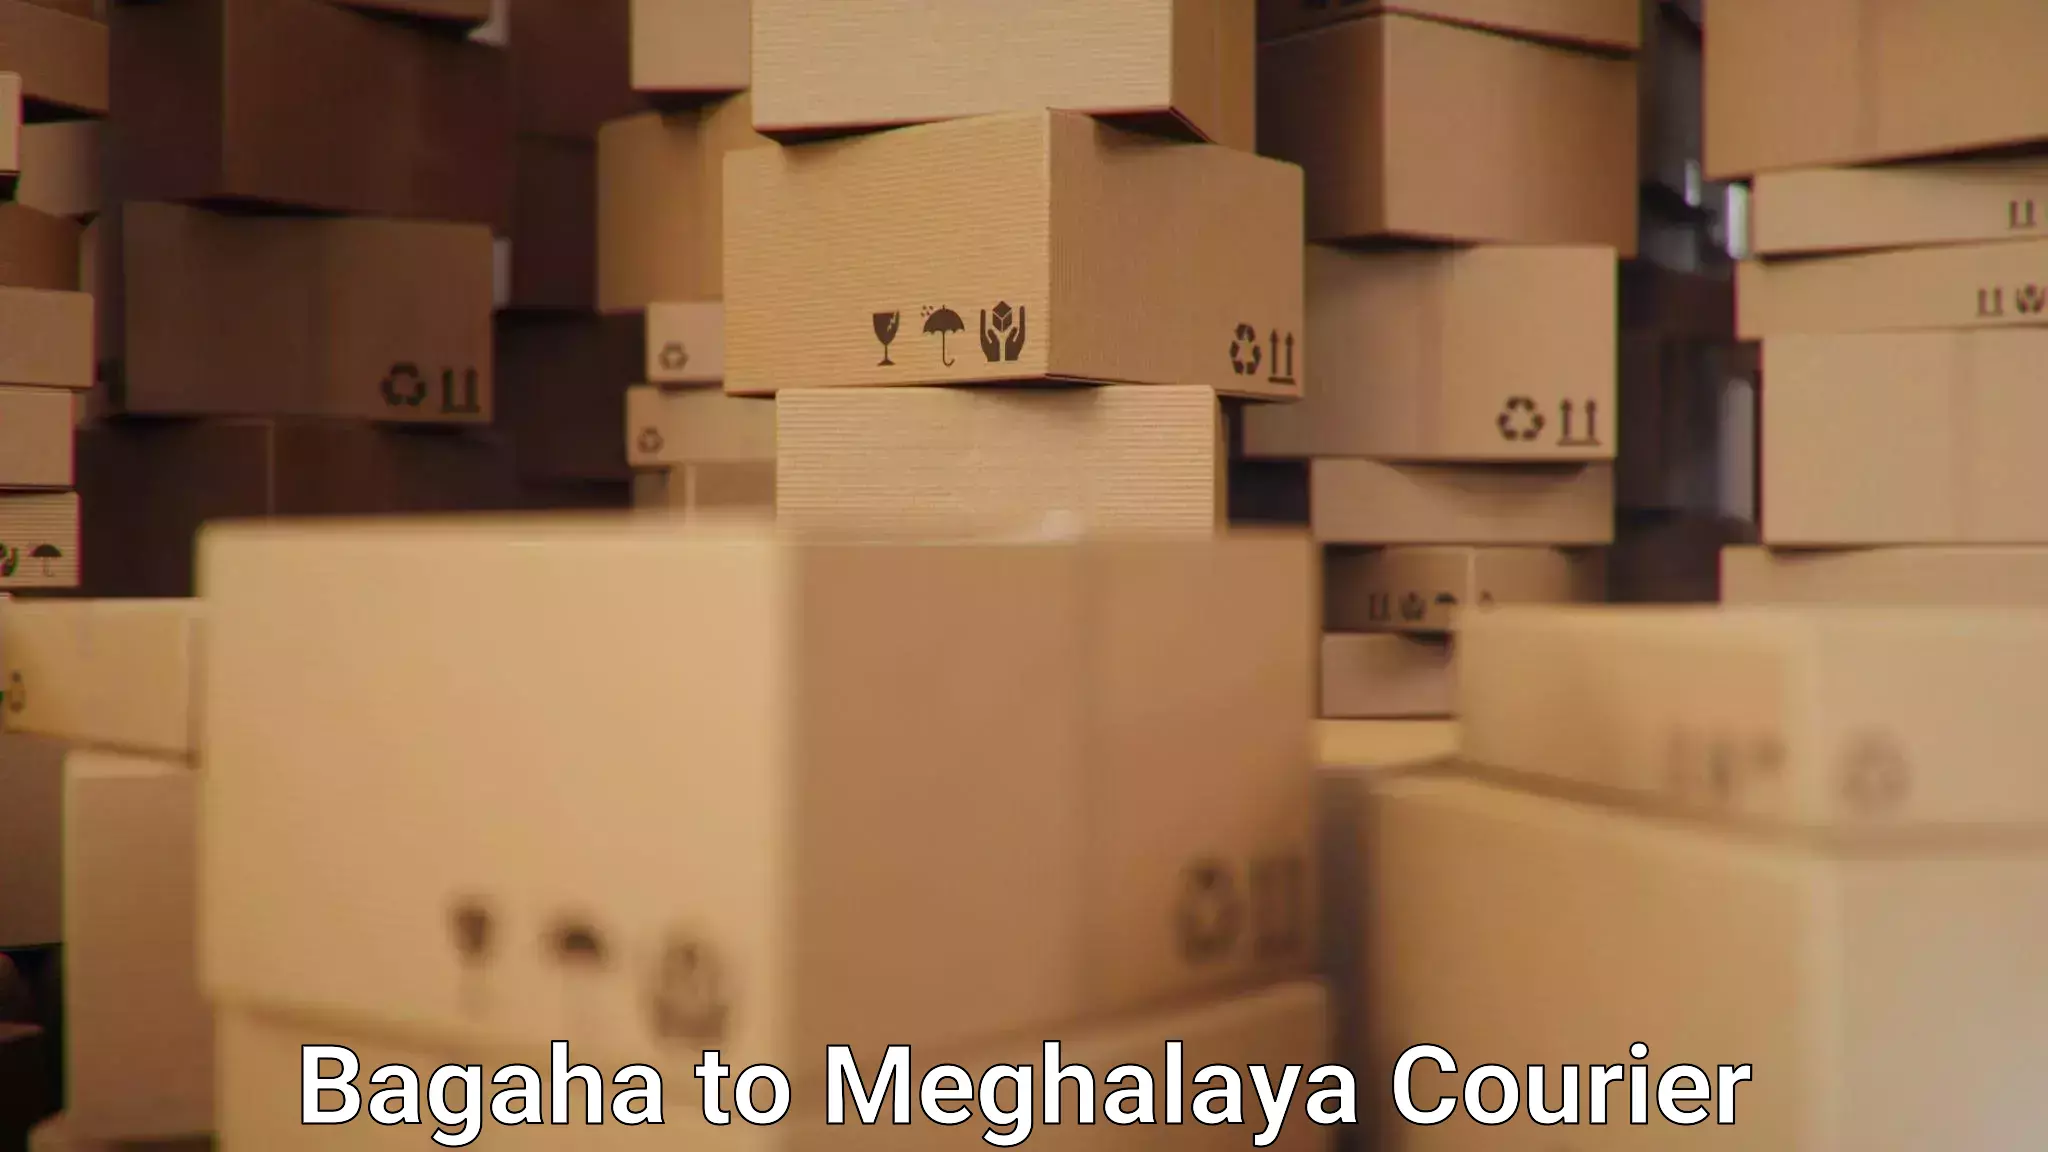 Courier service comparison Bagaha to Meghalaya